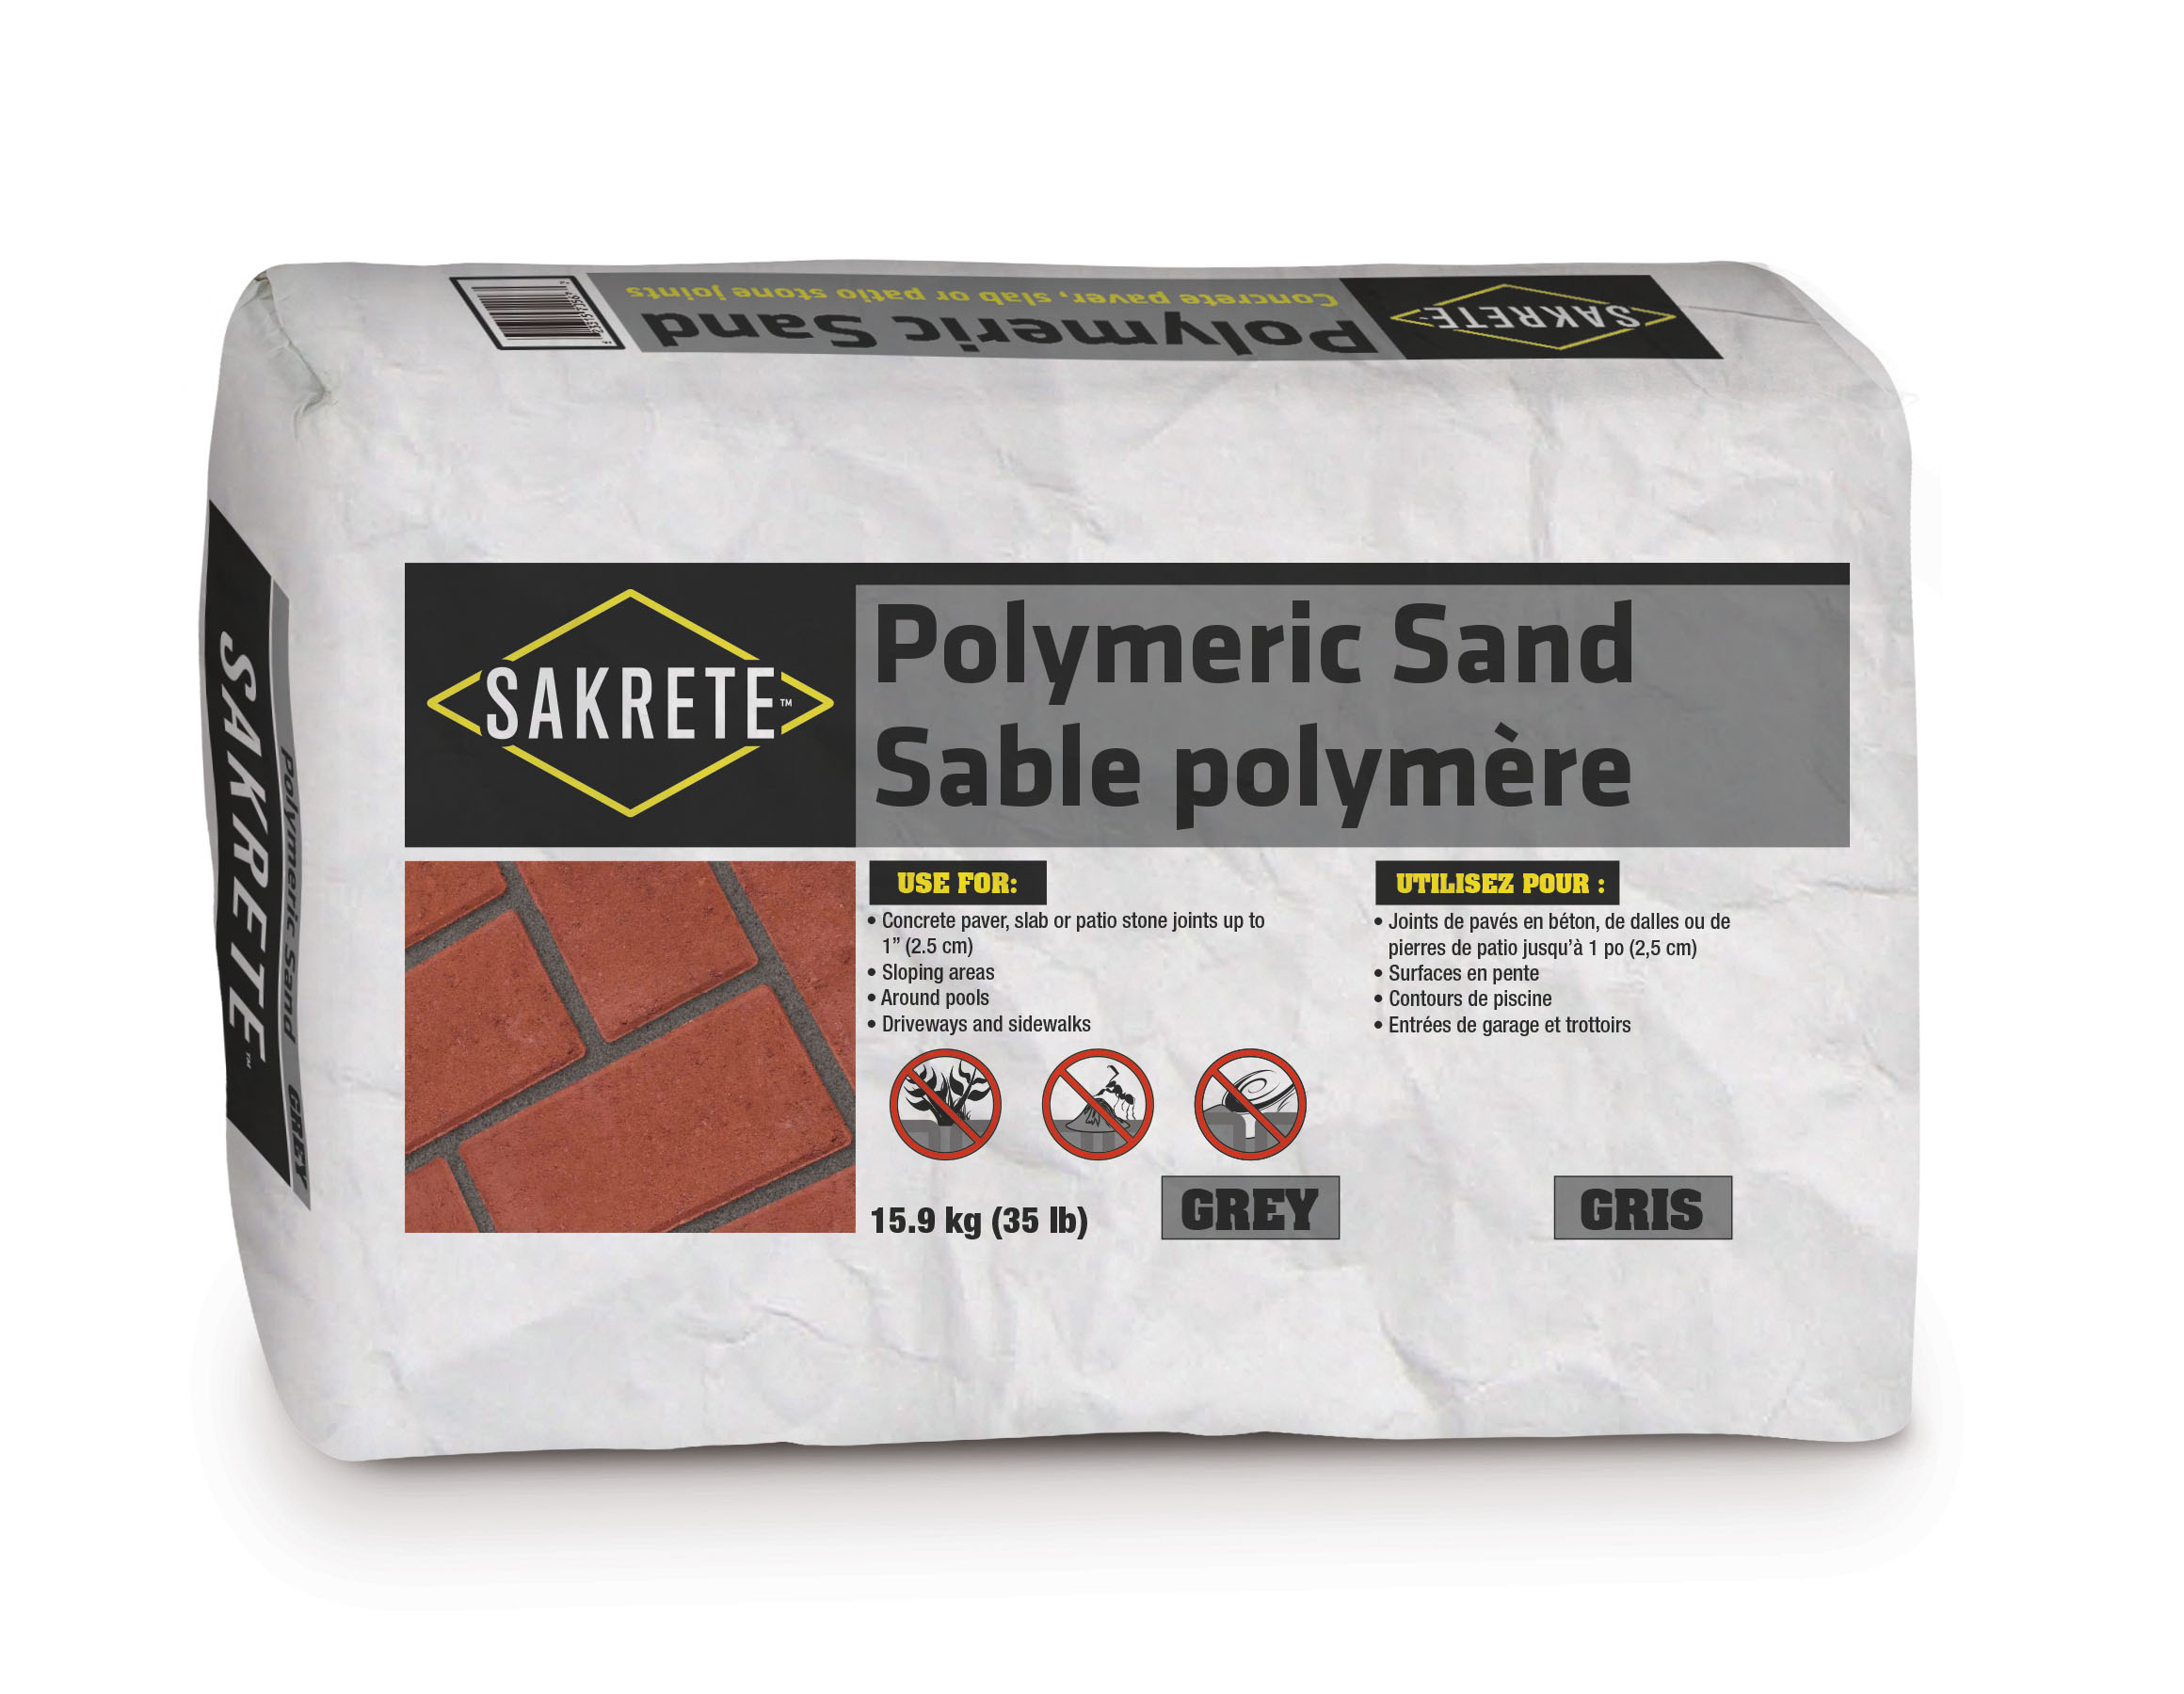 SAKRETE Polymeric Sand > KING Home Improvement Products